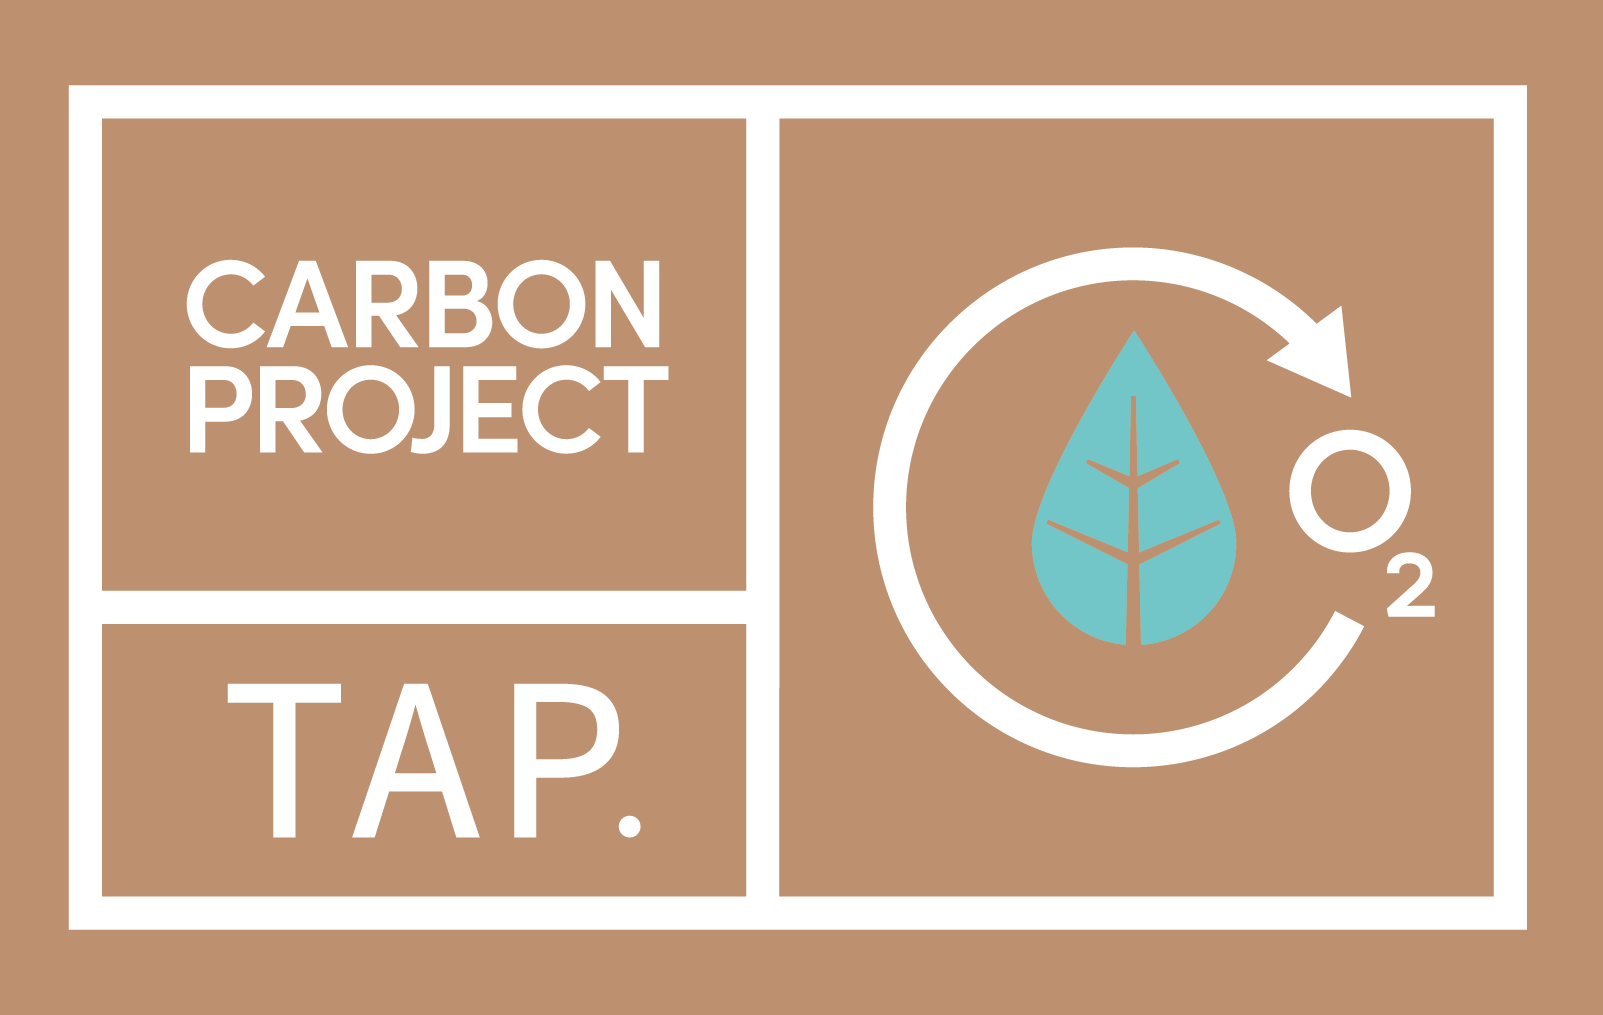 TAP. Carbon Project-MasterLogo-BROWNBG-CMYK.png